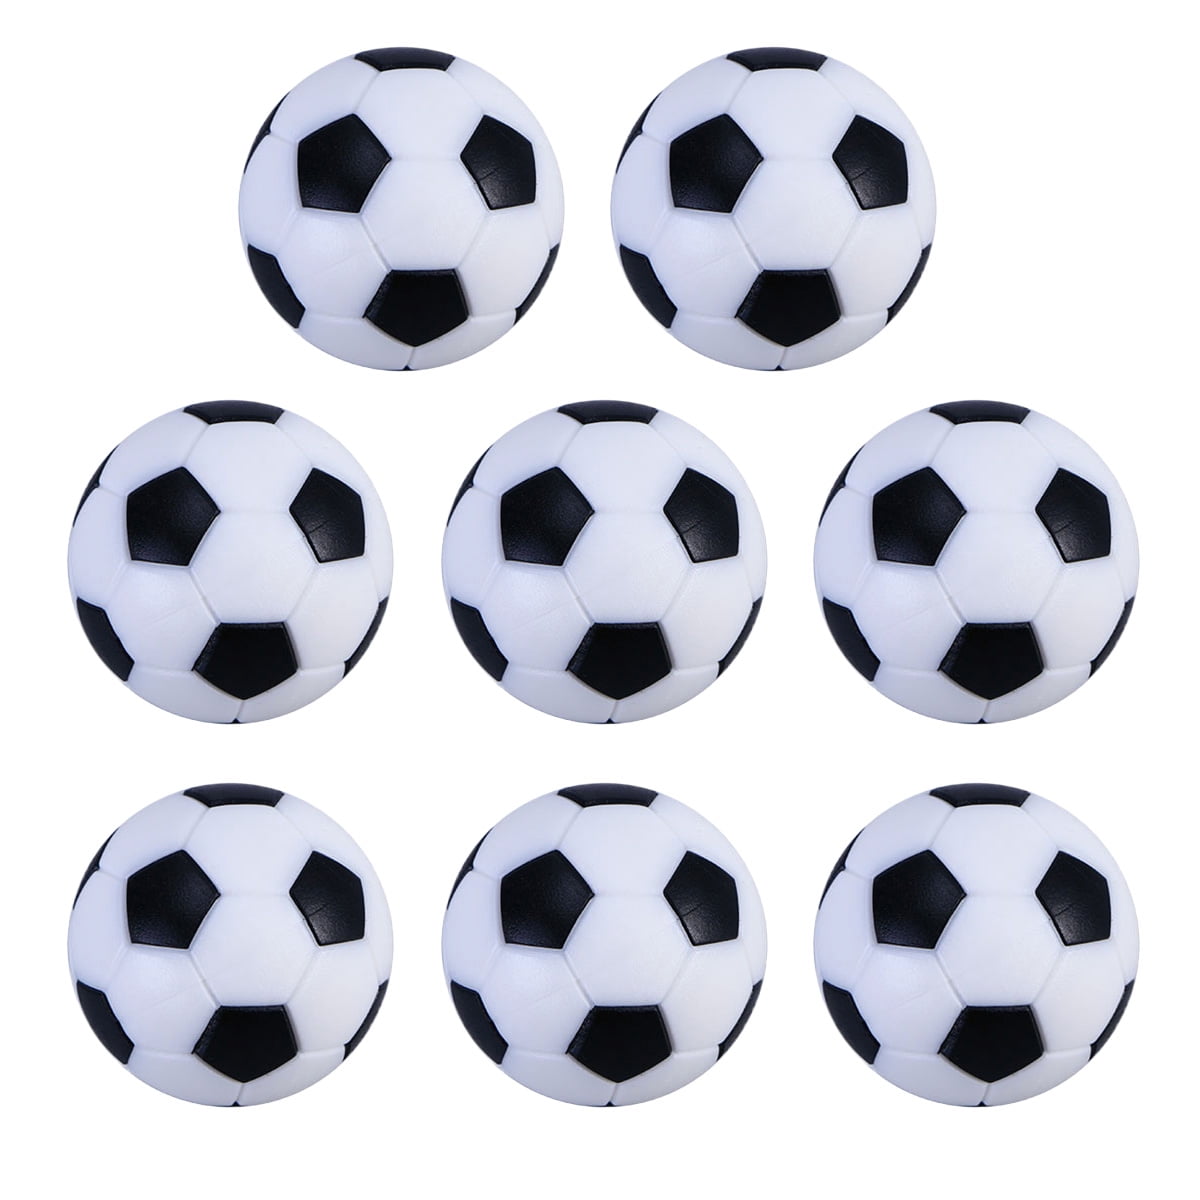 32mm Mini Soccer Table Foosball Ball Football Indoor Game XTS Entertainment R3Q9 